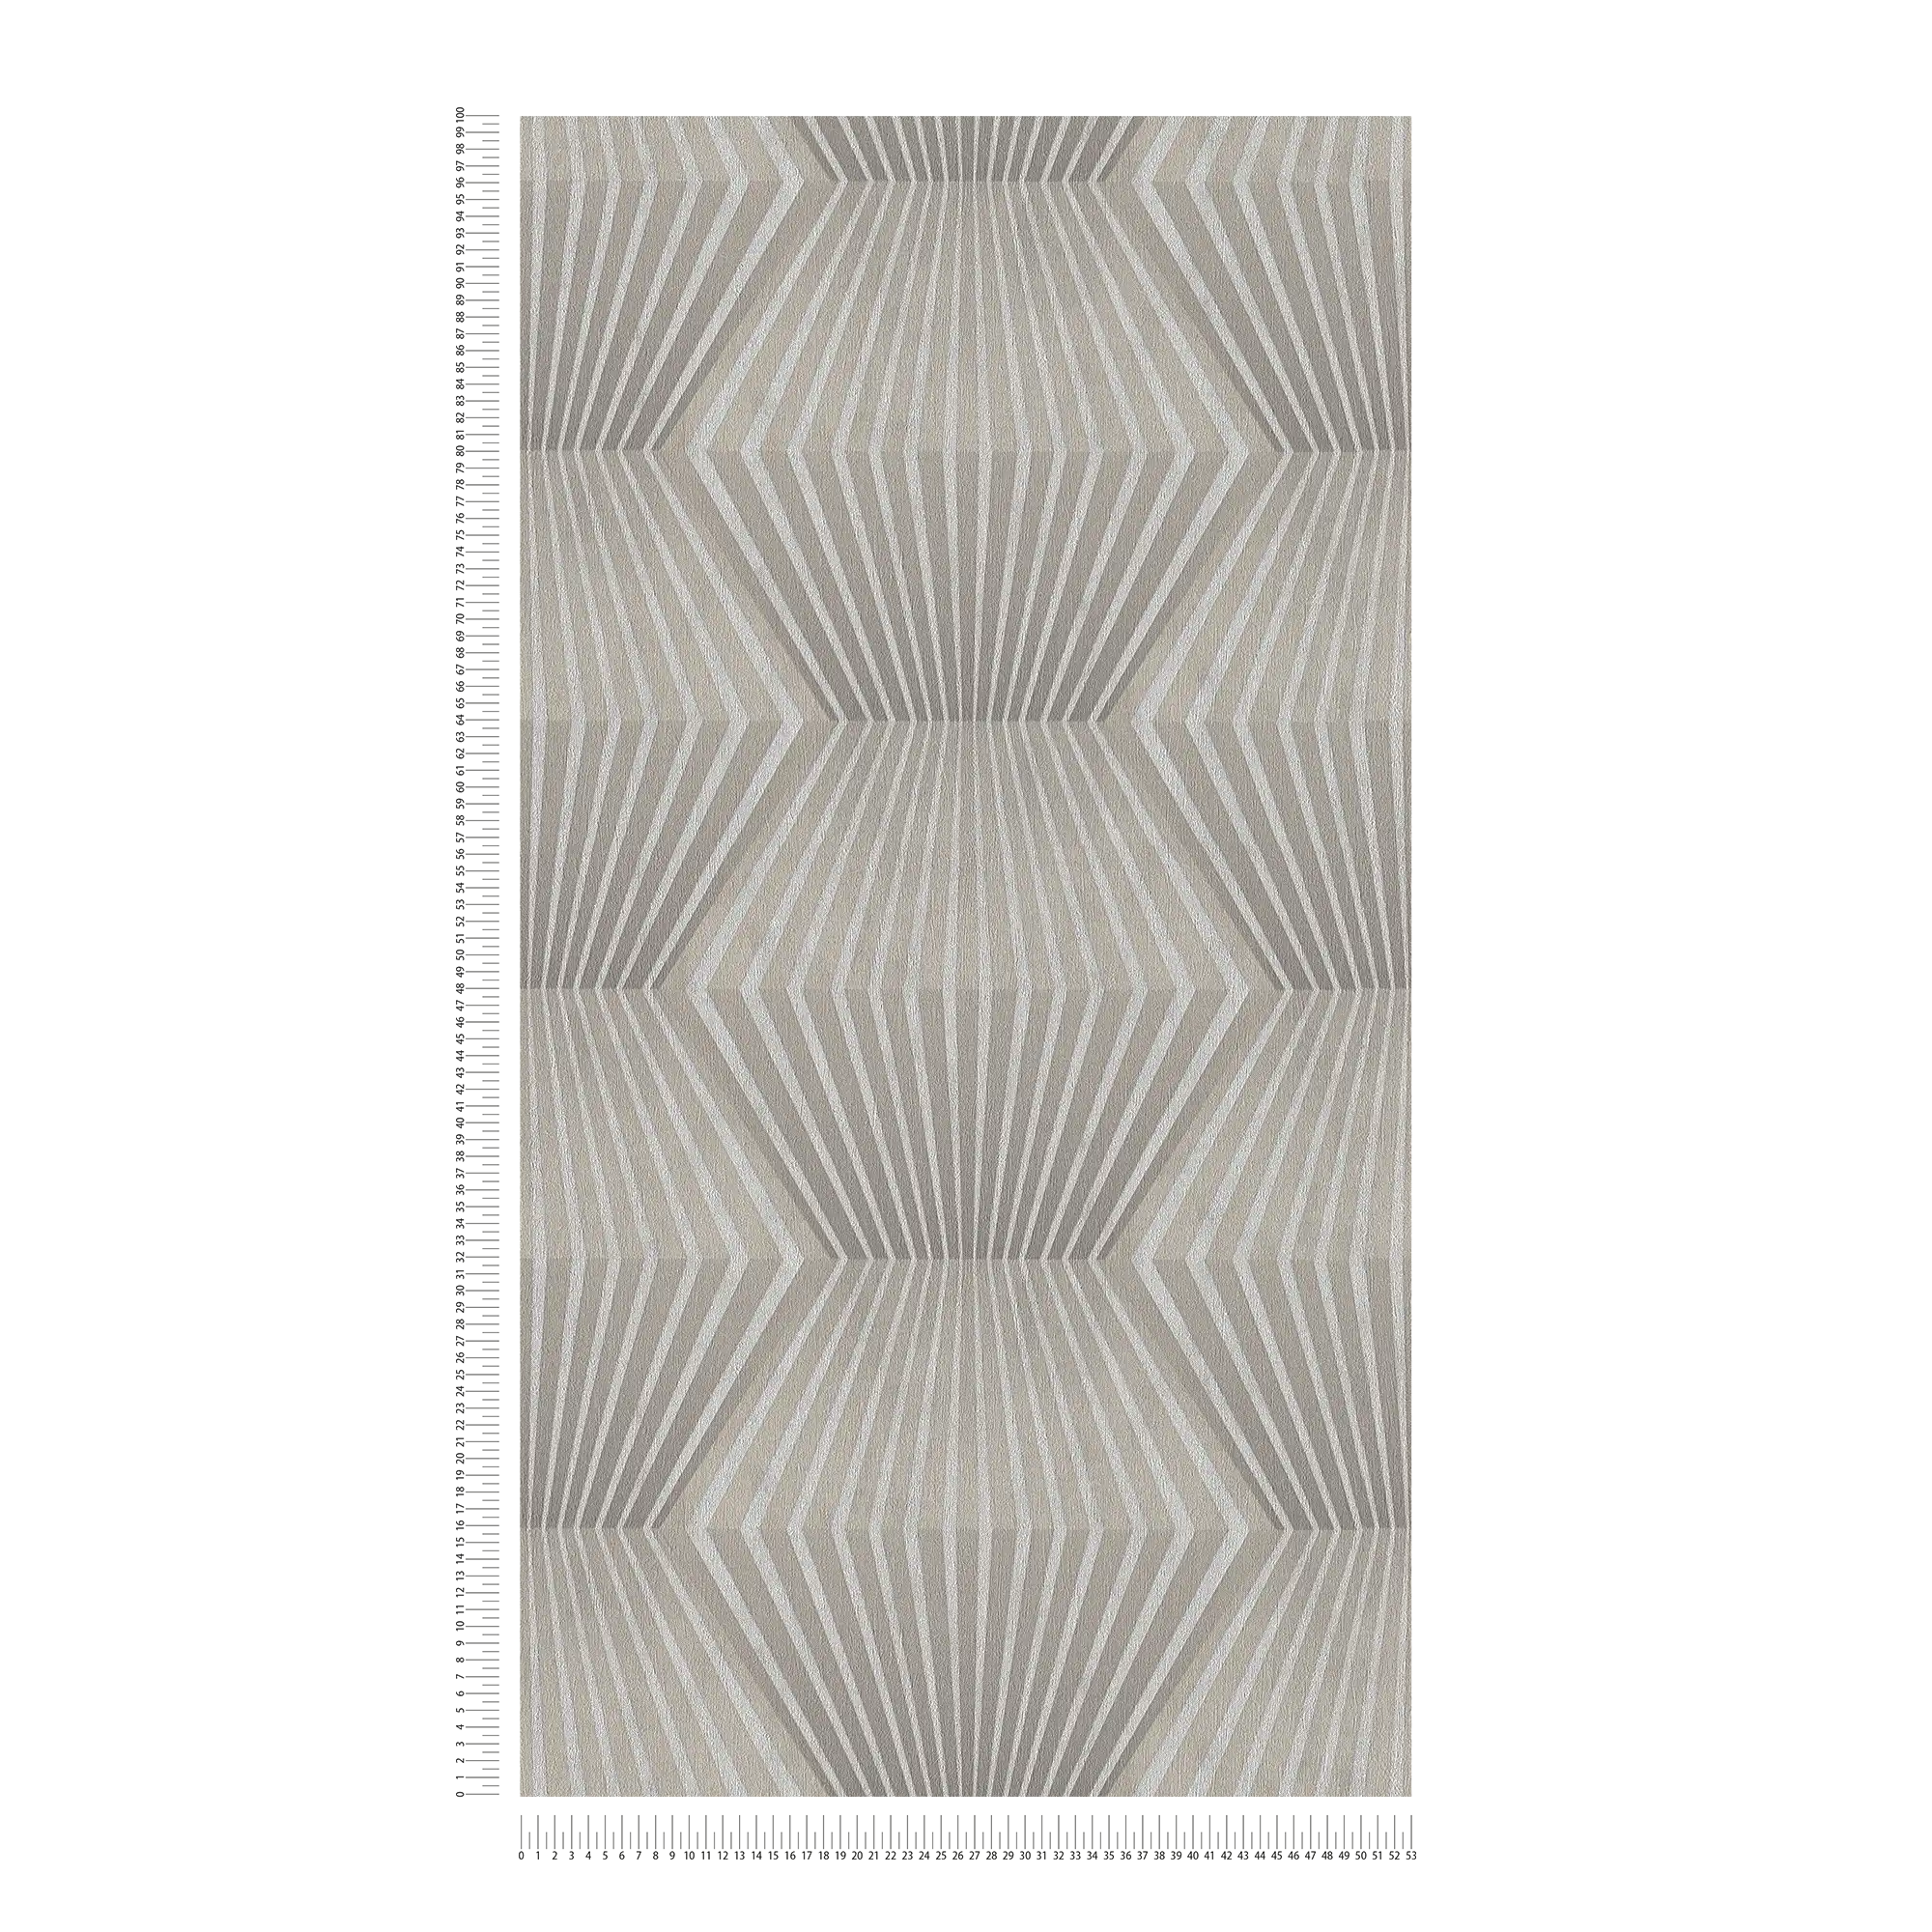             Carta da parati Art Déco con motivo a linee e fondo metallico - Marrone, grigio
        